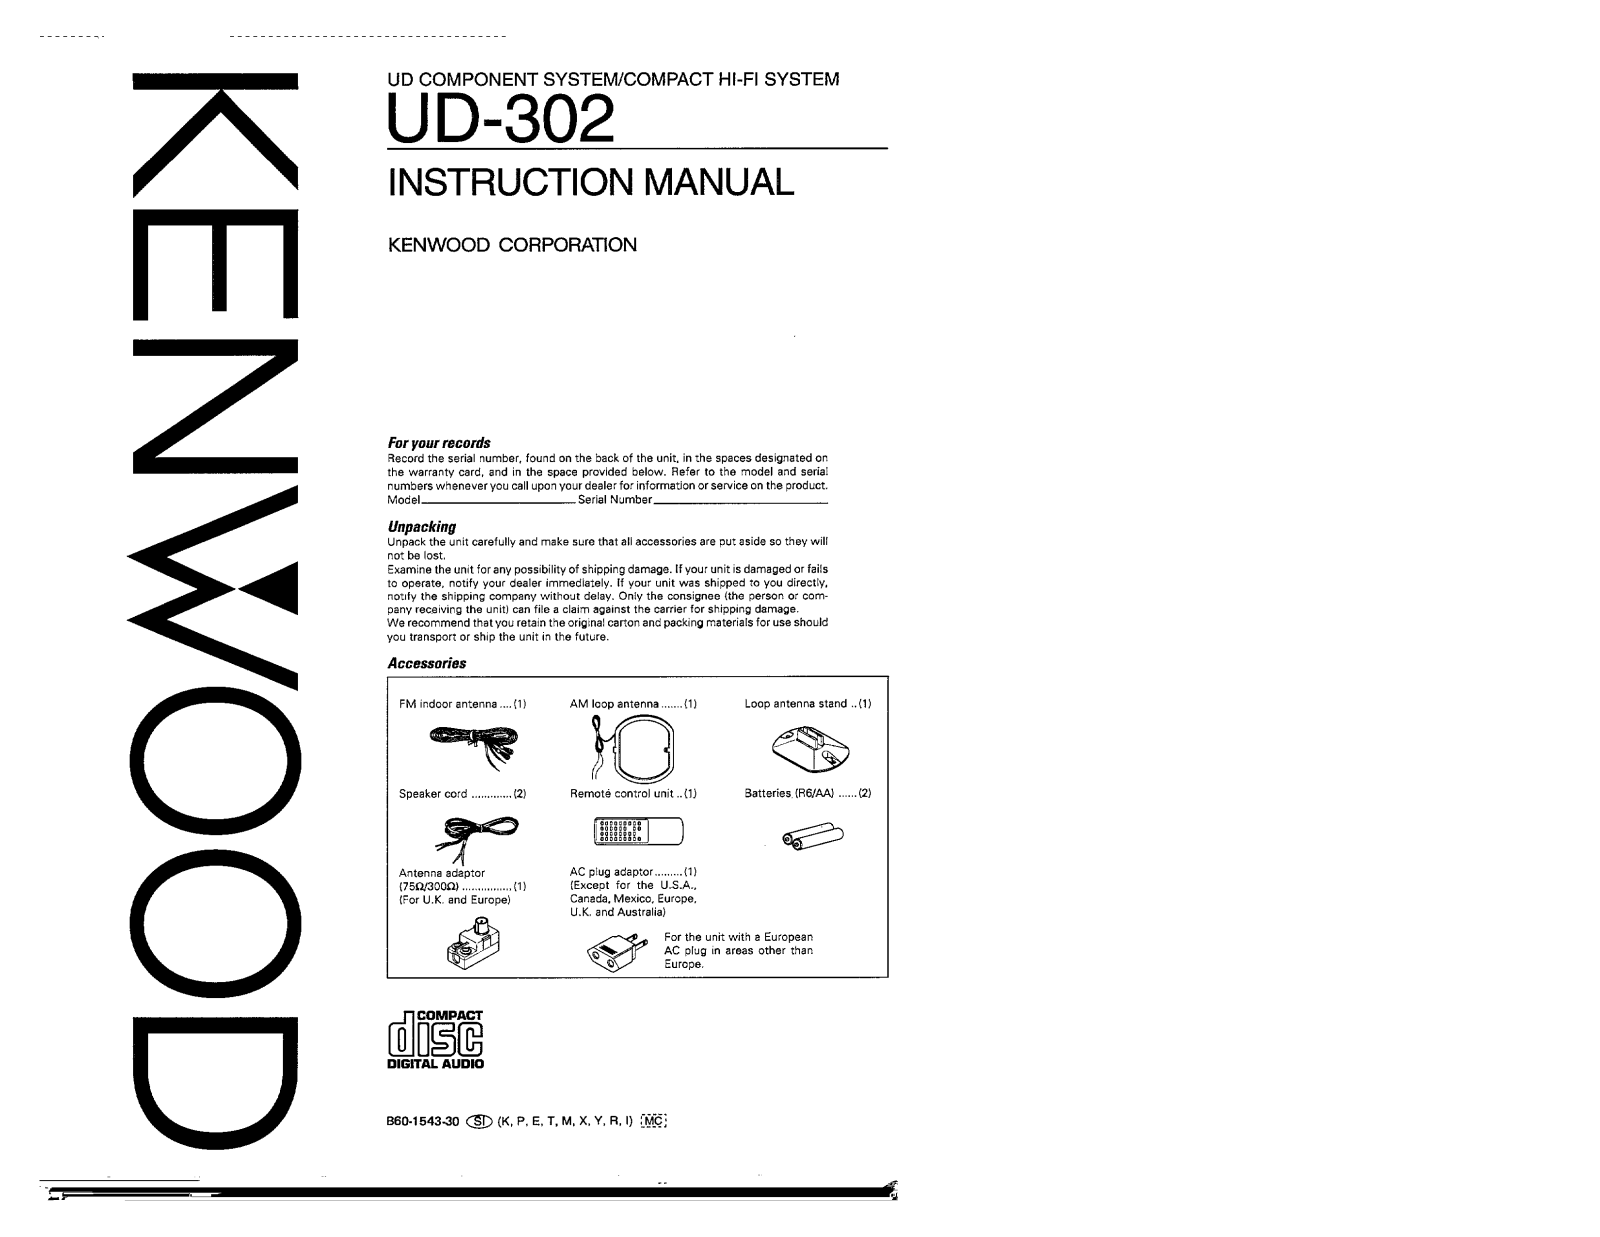 Kenwood RXD-C3, RXD-C3L, LS-C3, UD-302 Owner's Manual